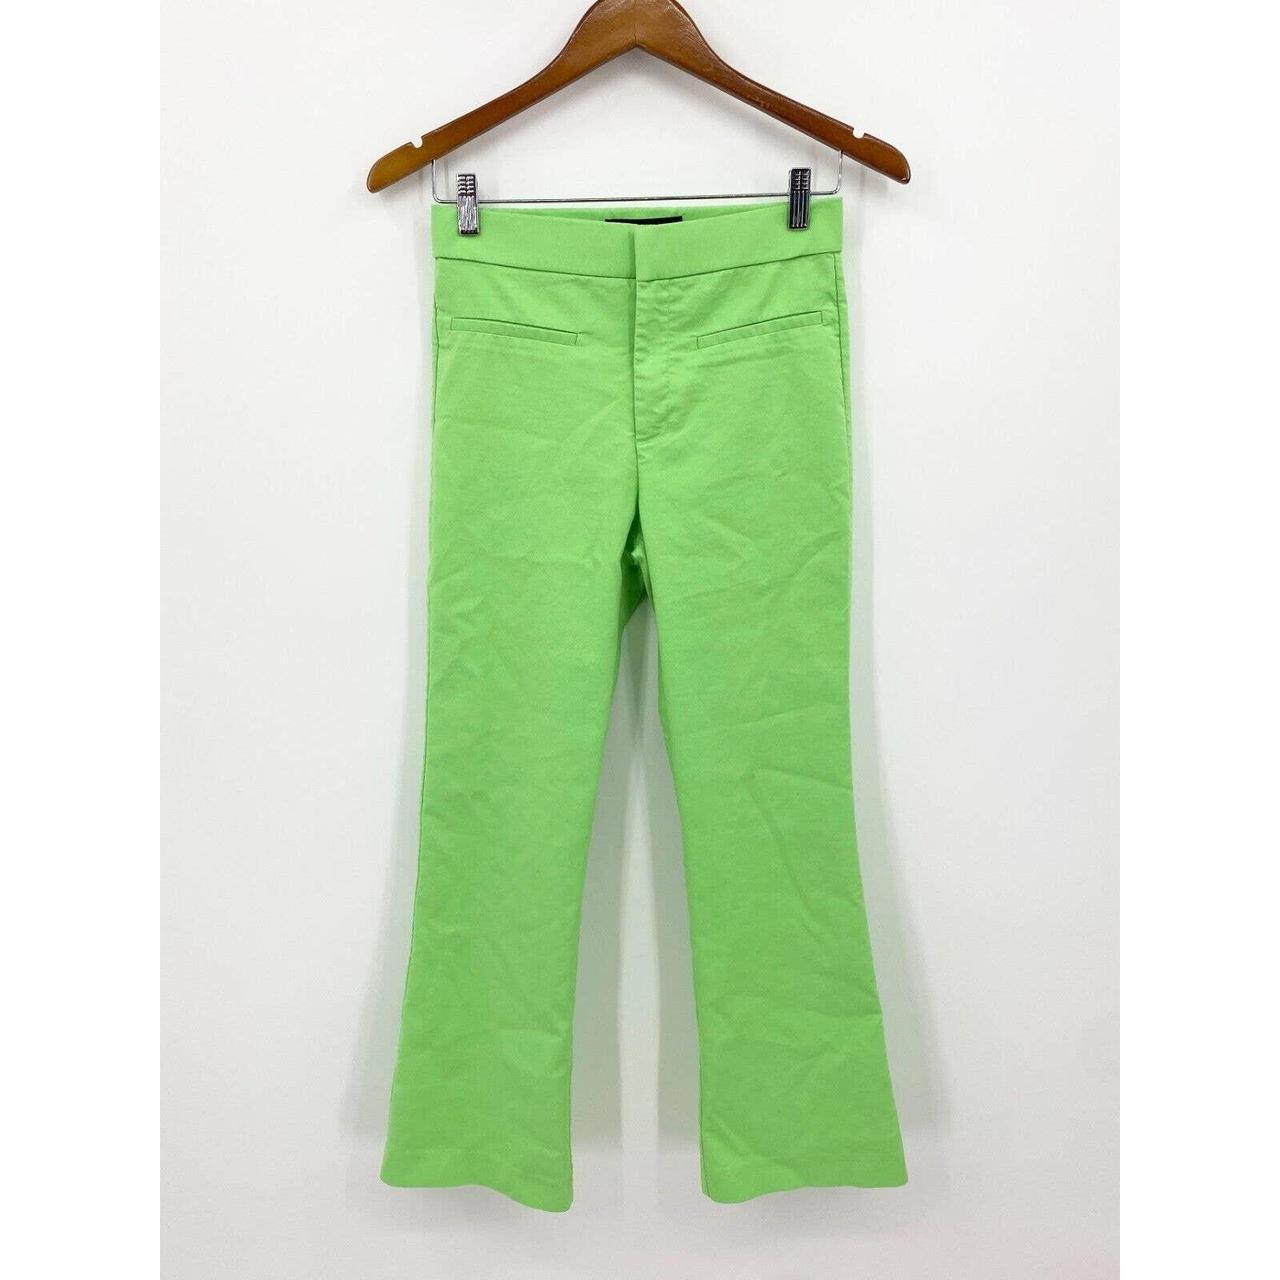 Buy Green Slim Pants Online - W for Woman